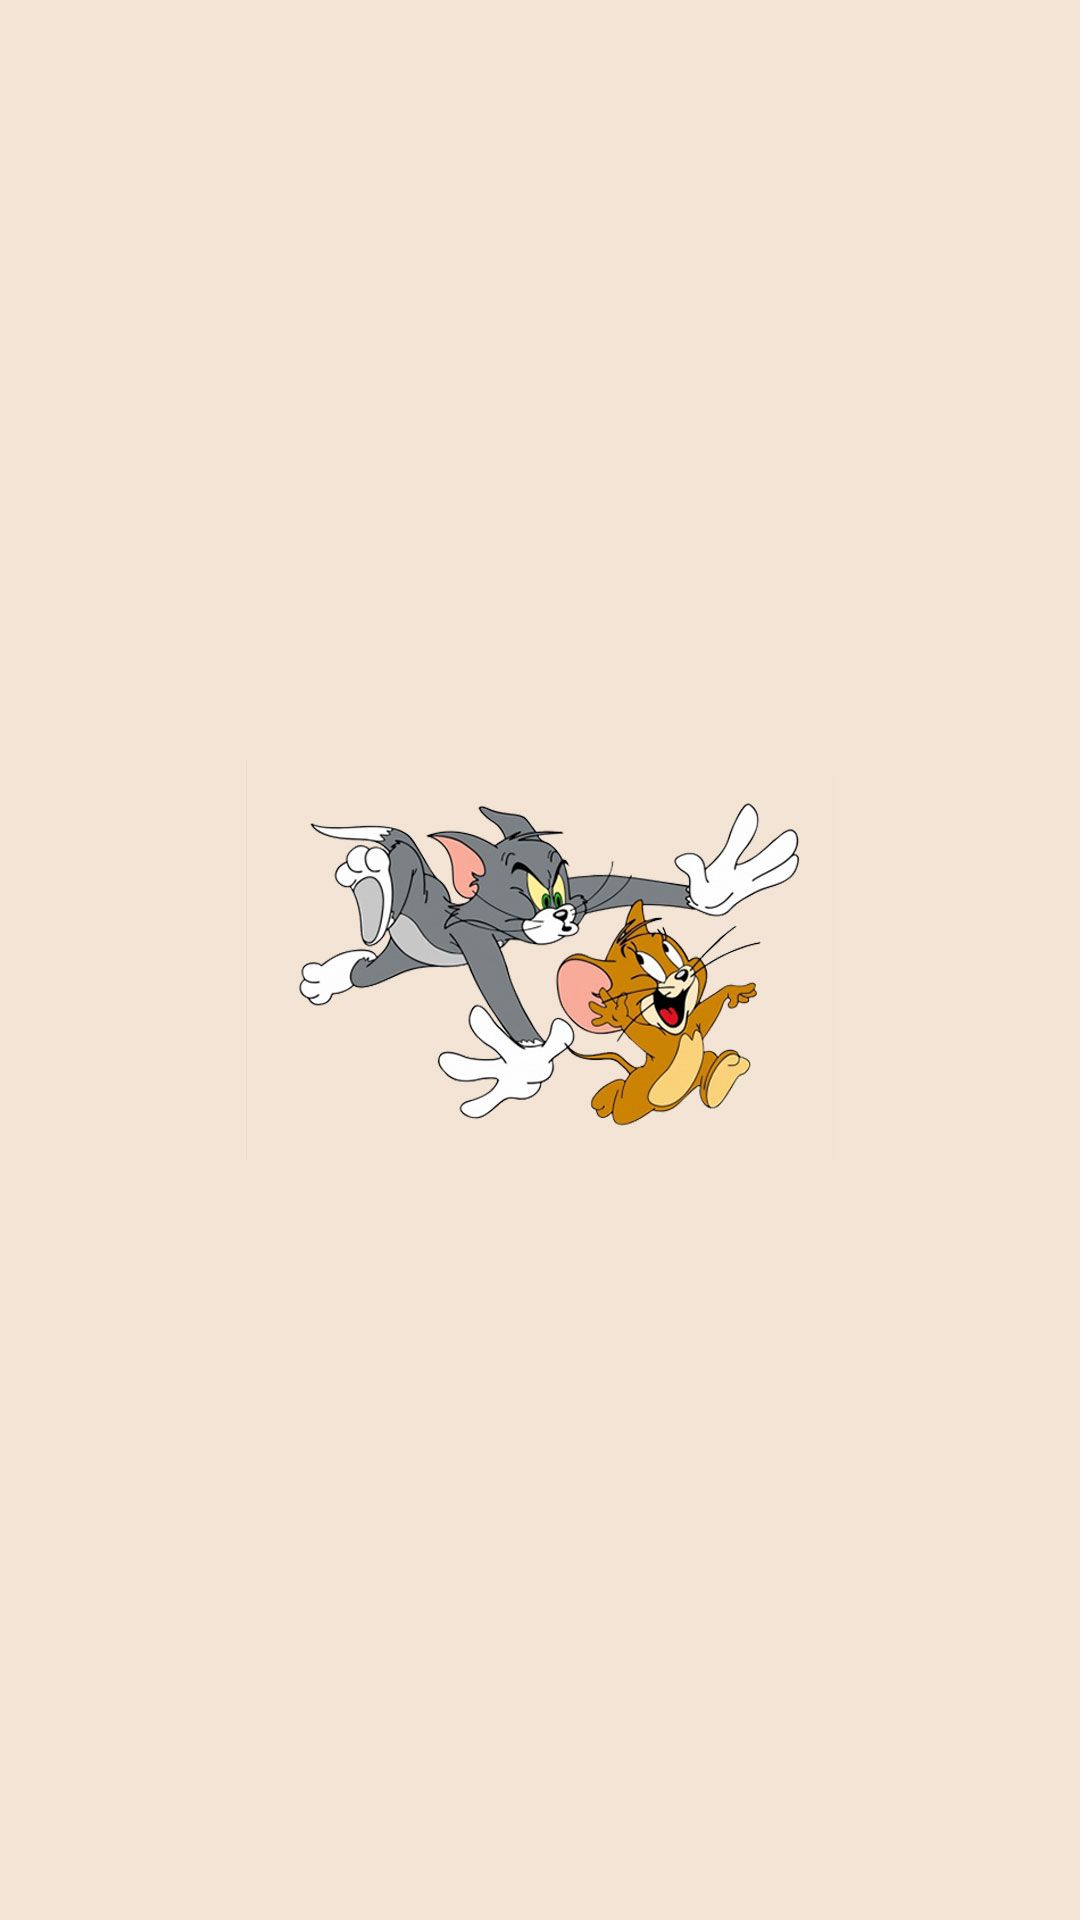 1080x1920 Tom and Jerry Quote Iphone Wallpaper # mobile #phone #iphone | Обои Том и Джерри Мультяшные обои Том и Джерри 